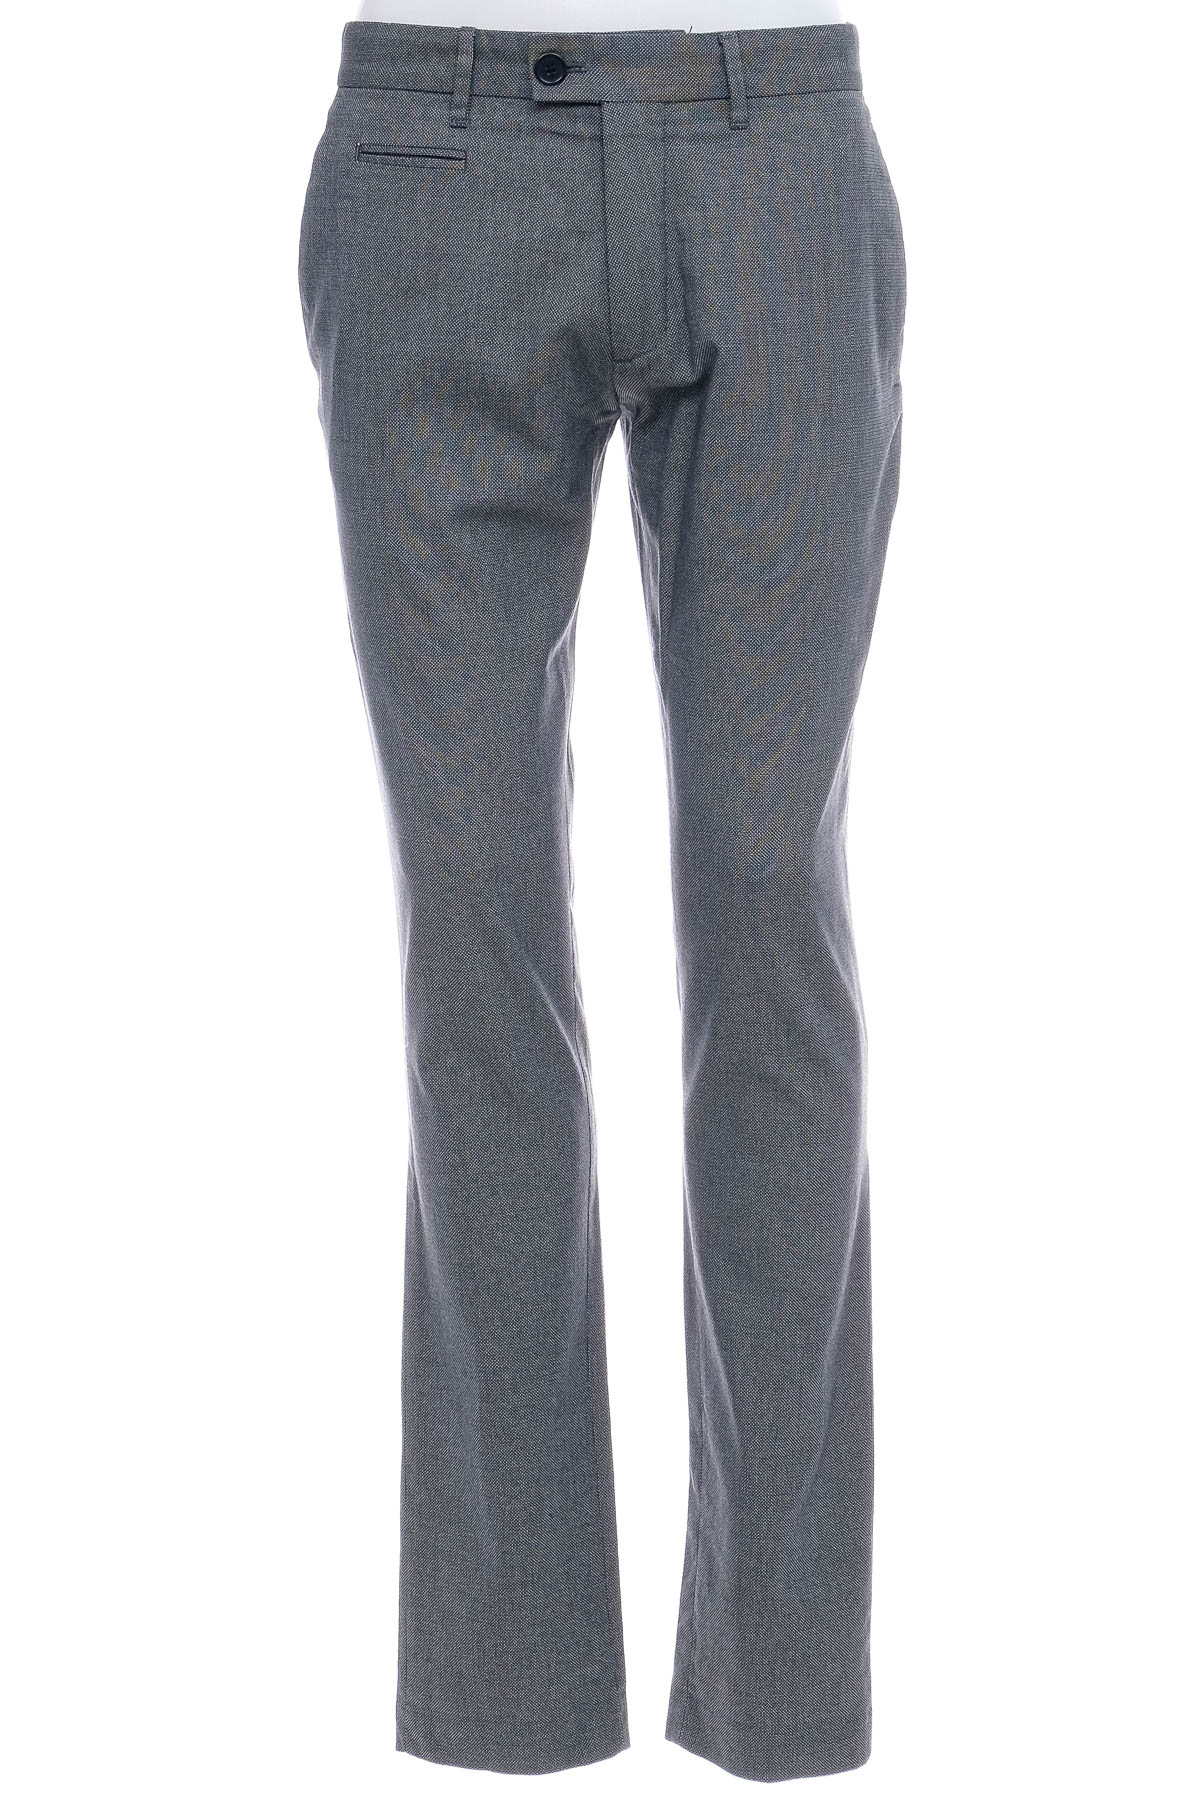 Pantalon pentru bărbați - ZARA Man - 0